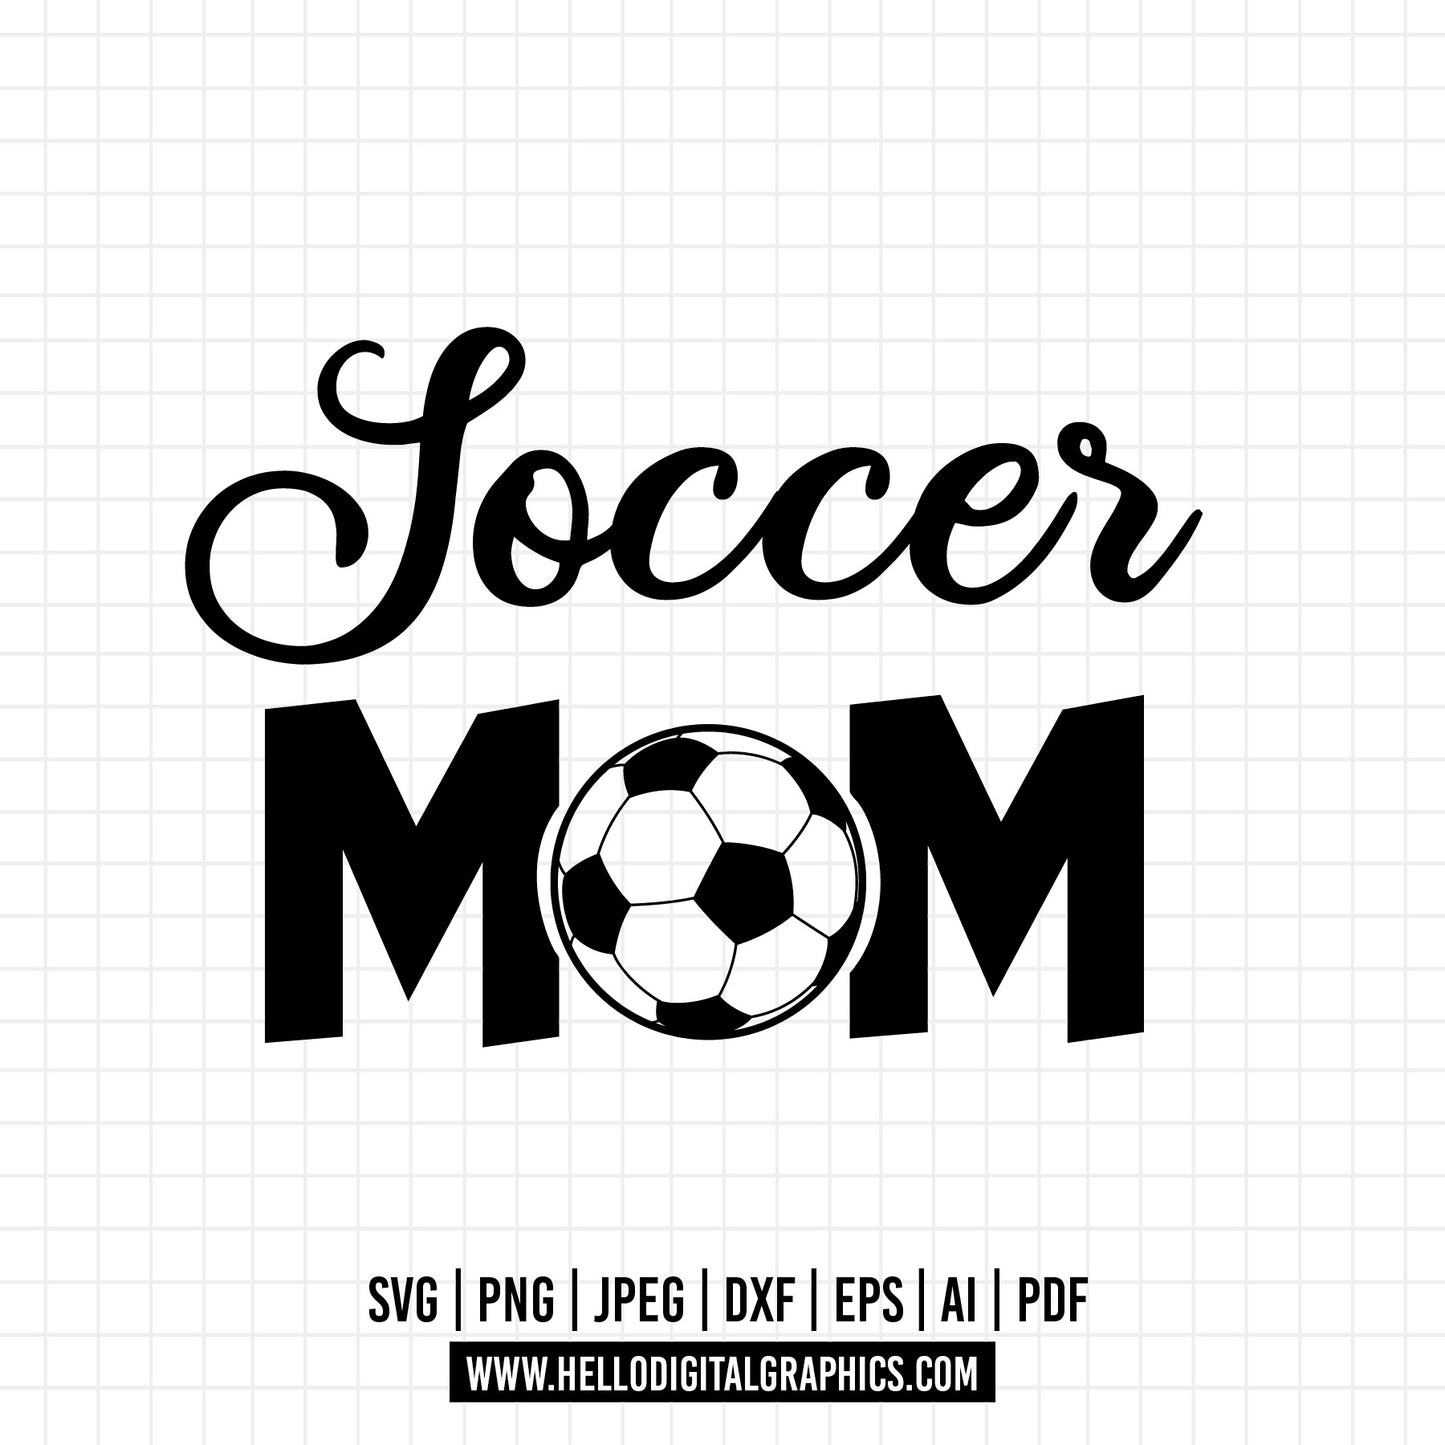 COD747- Soccer mom, mom svg, soccer svg, sport svg